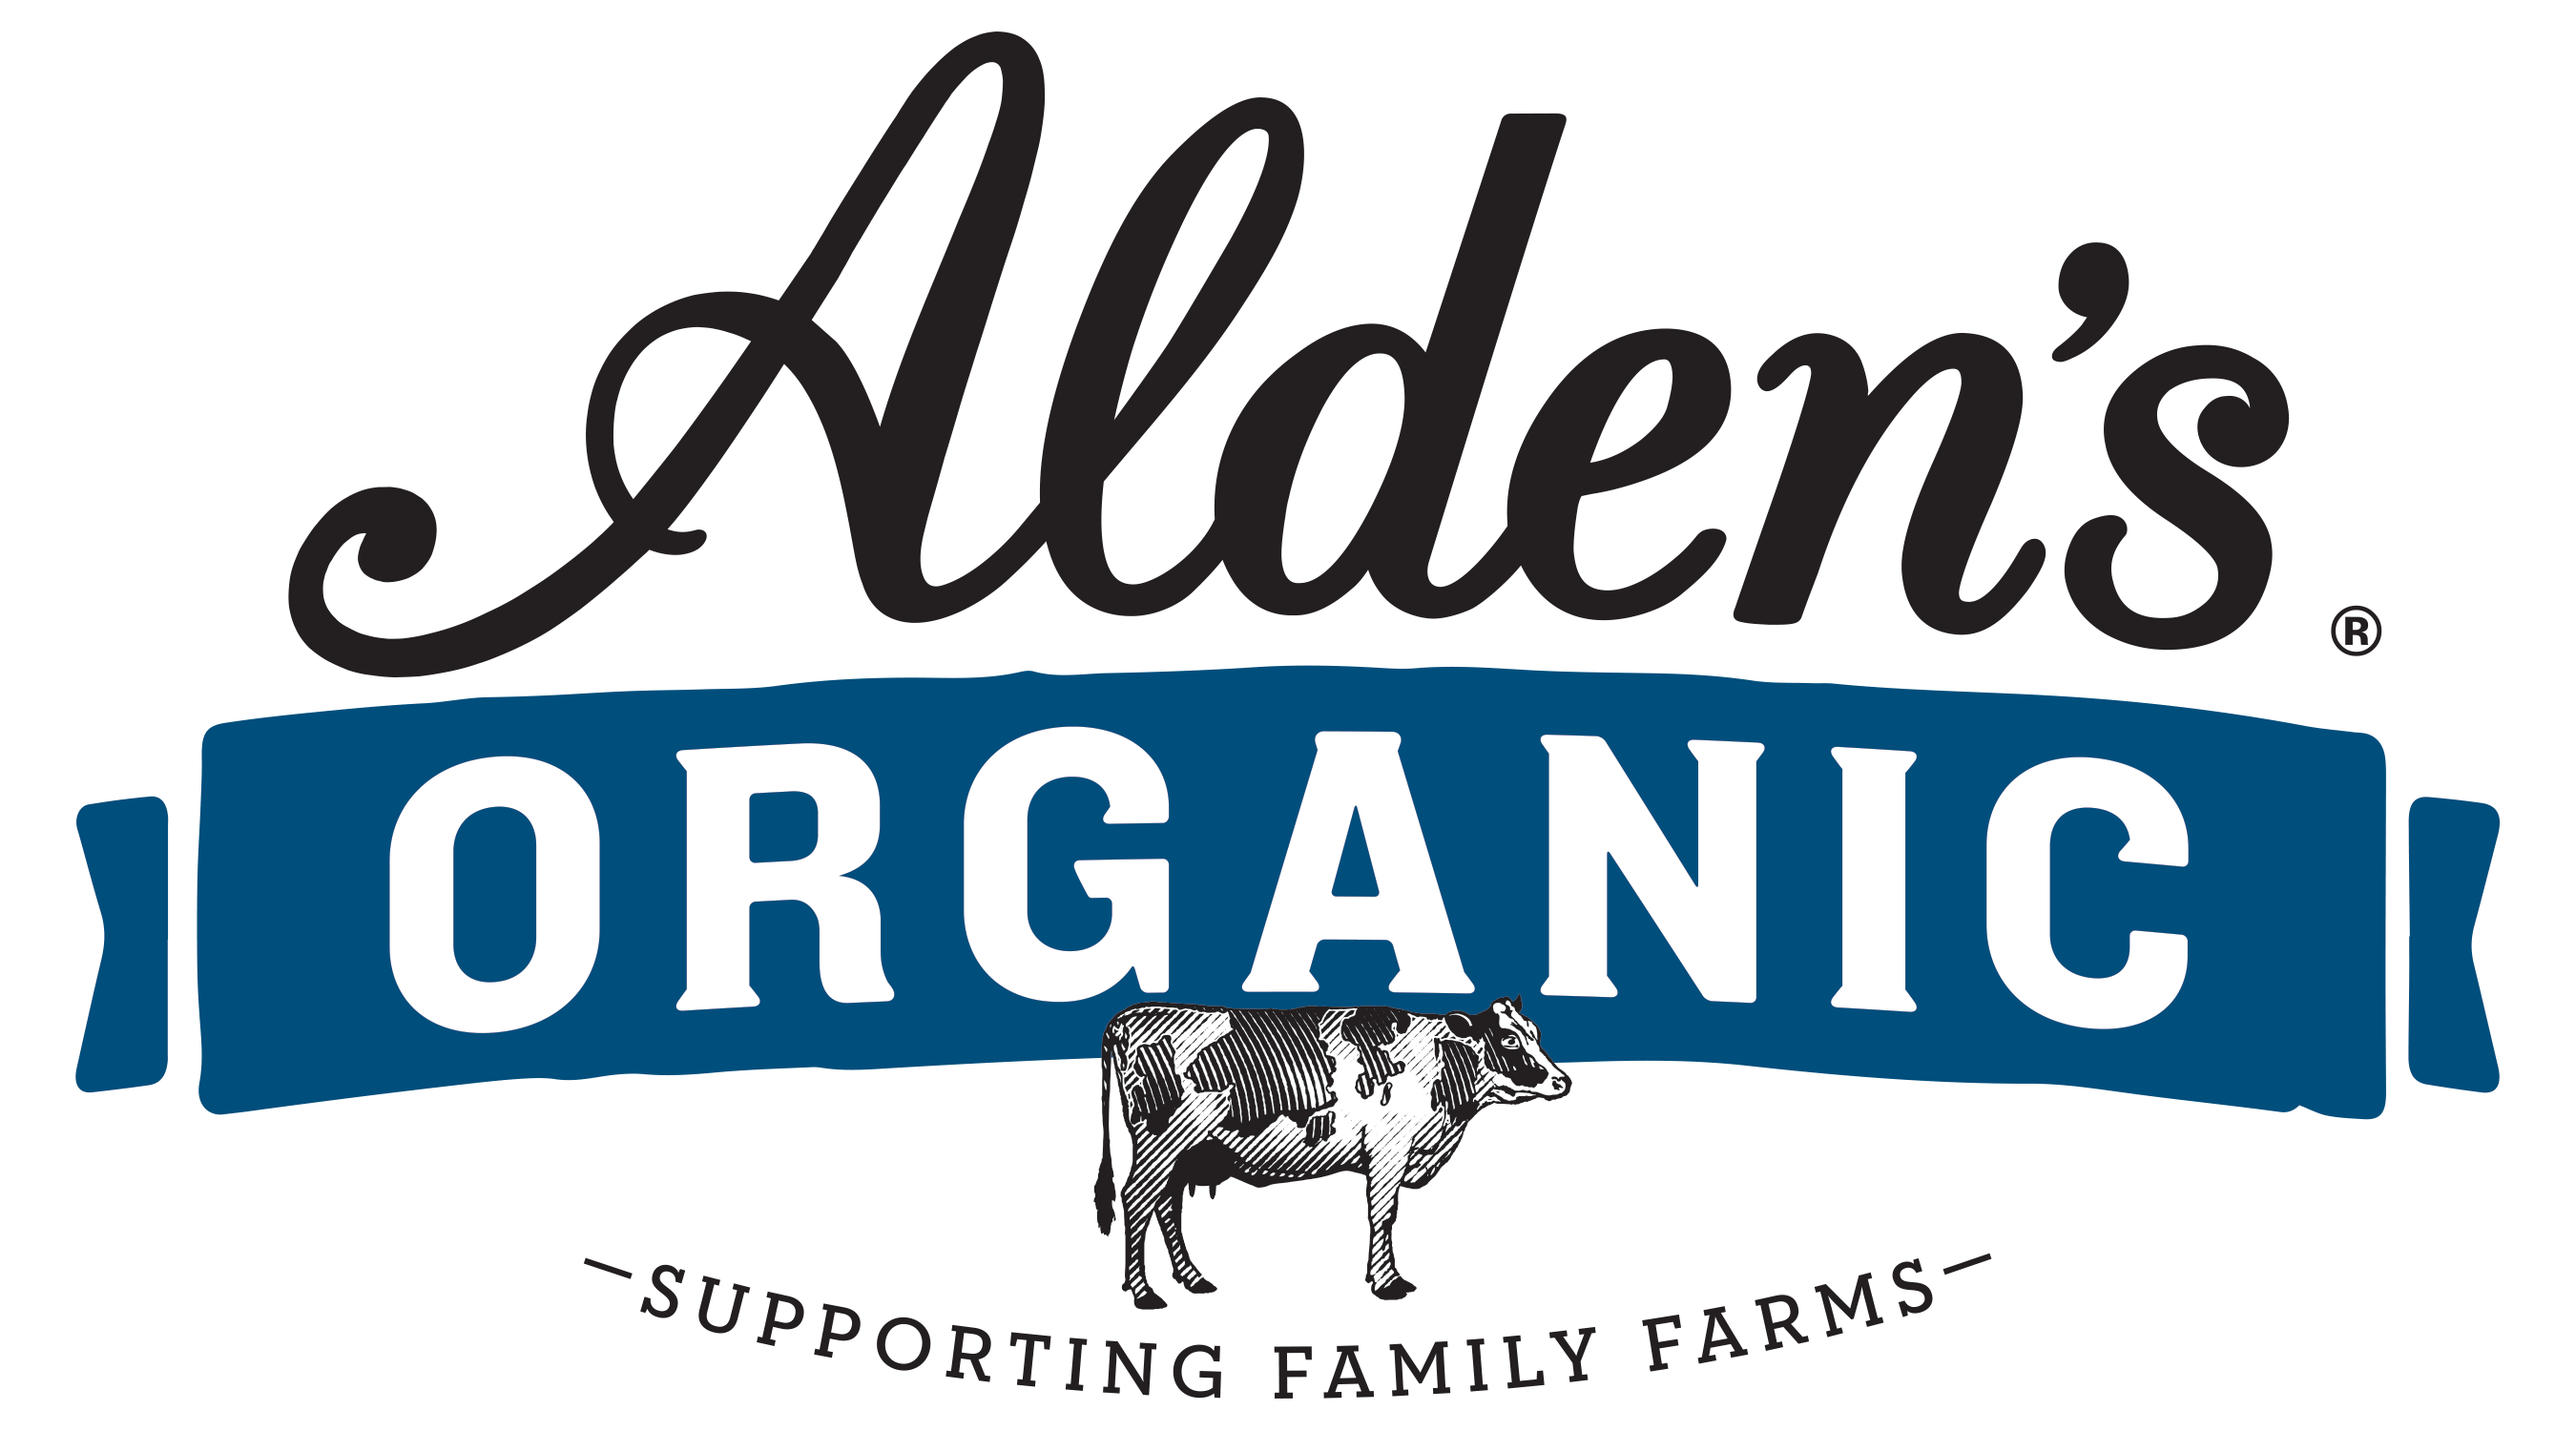 Creams Brand Logo - Alden's Ice Cream